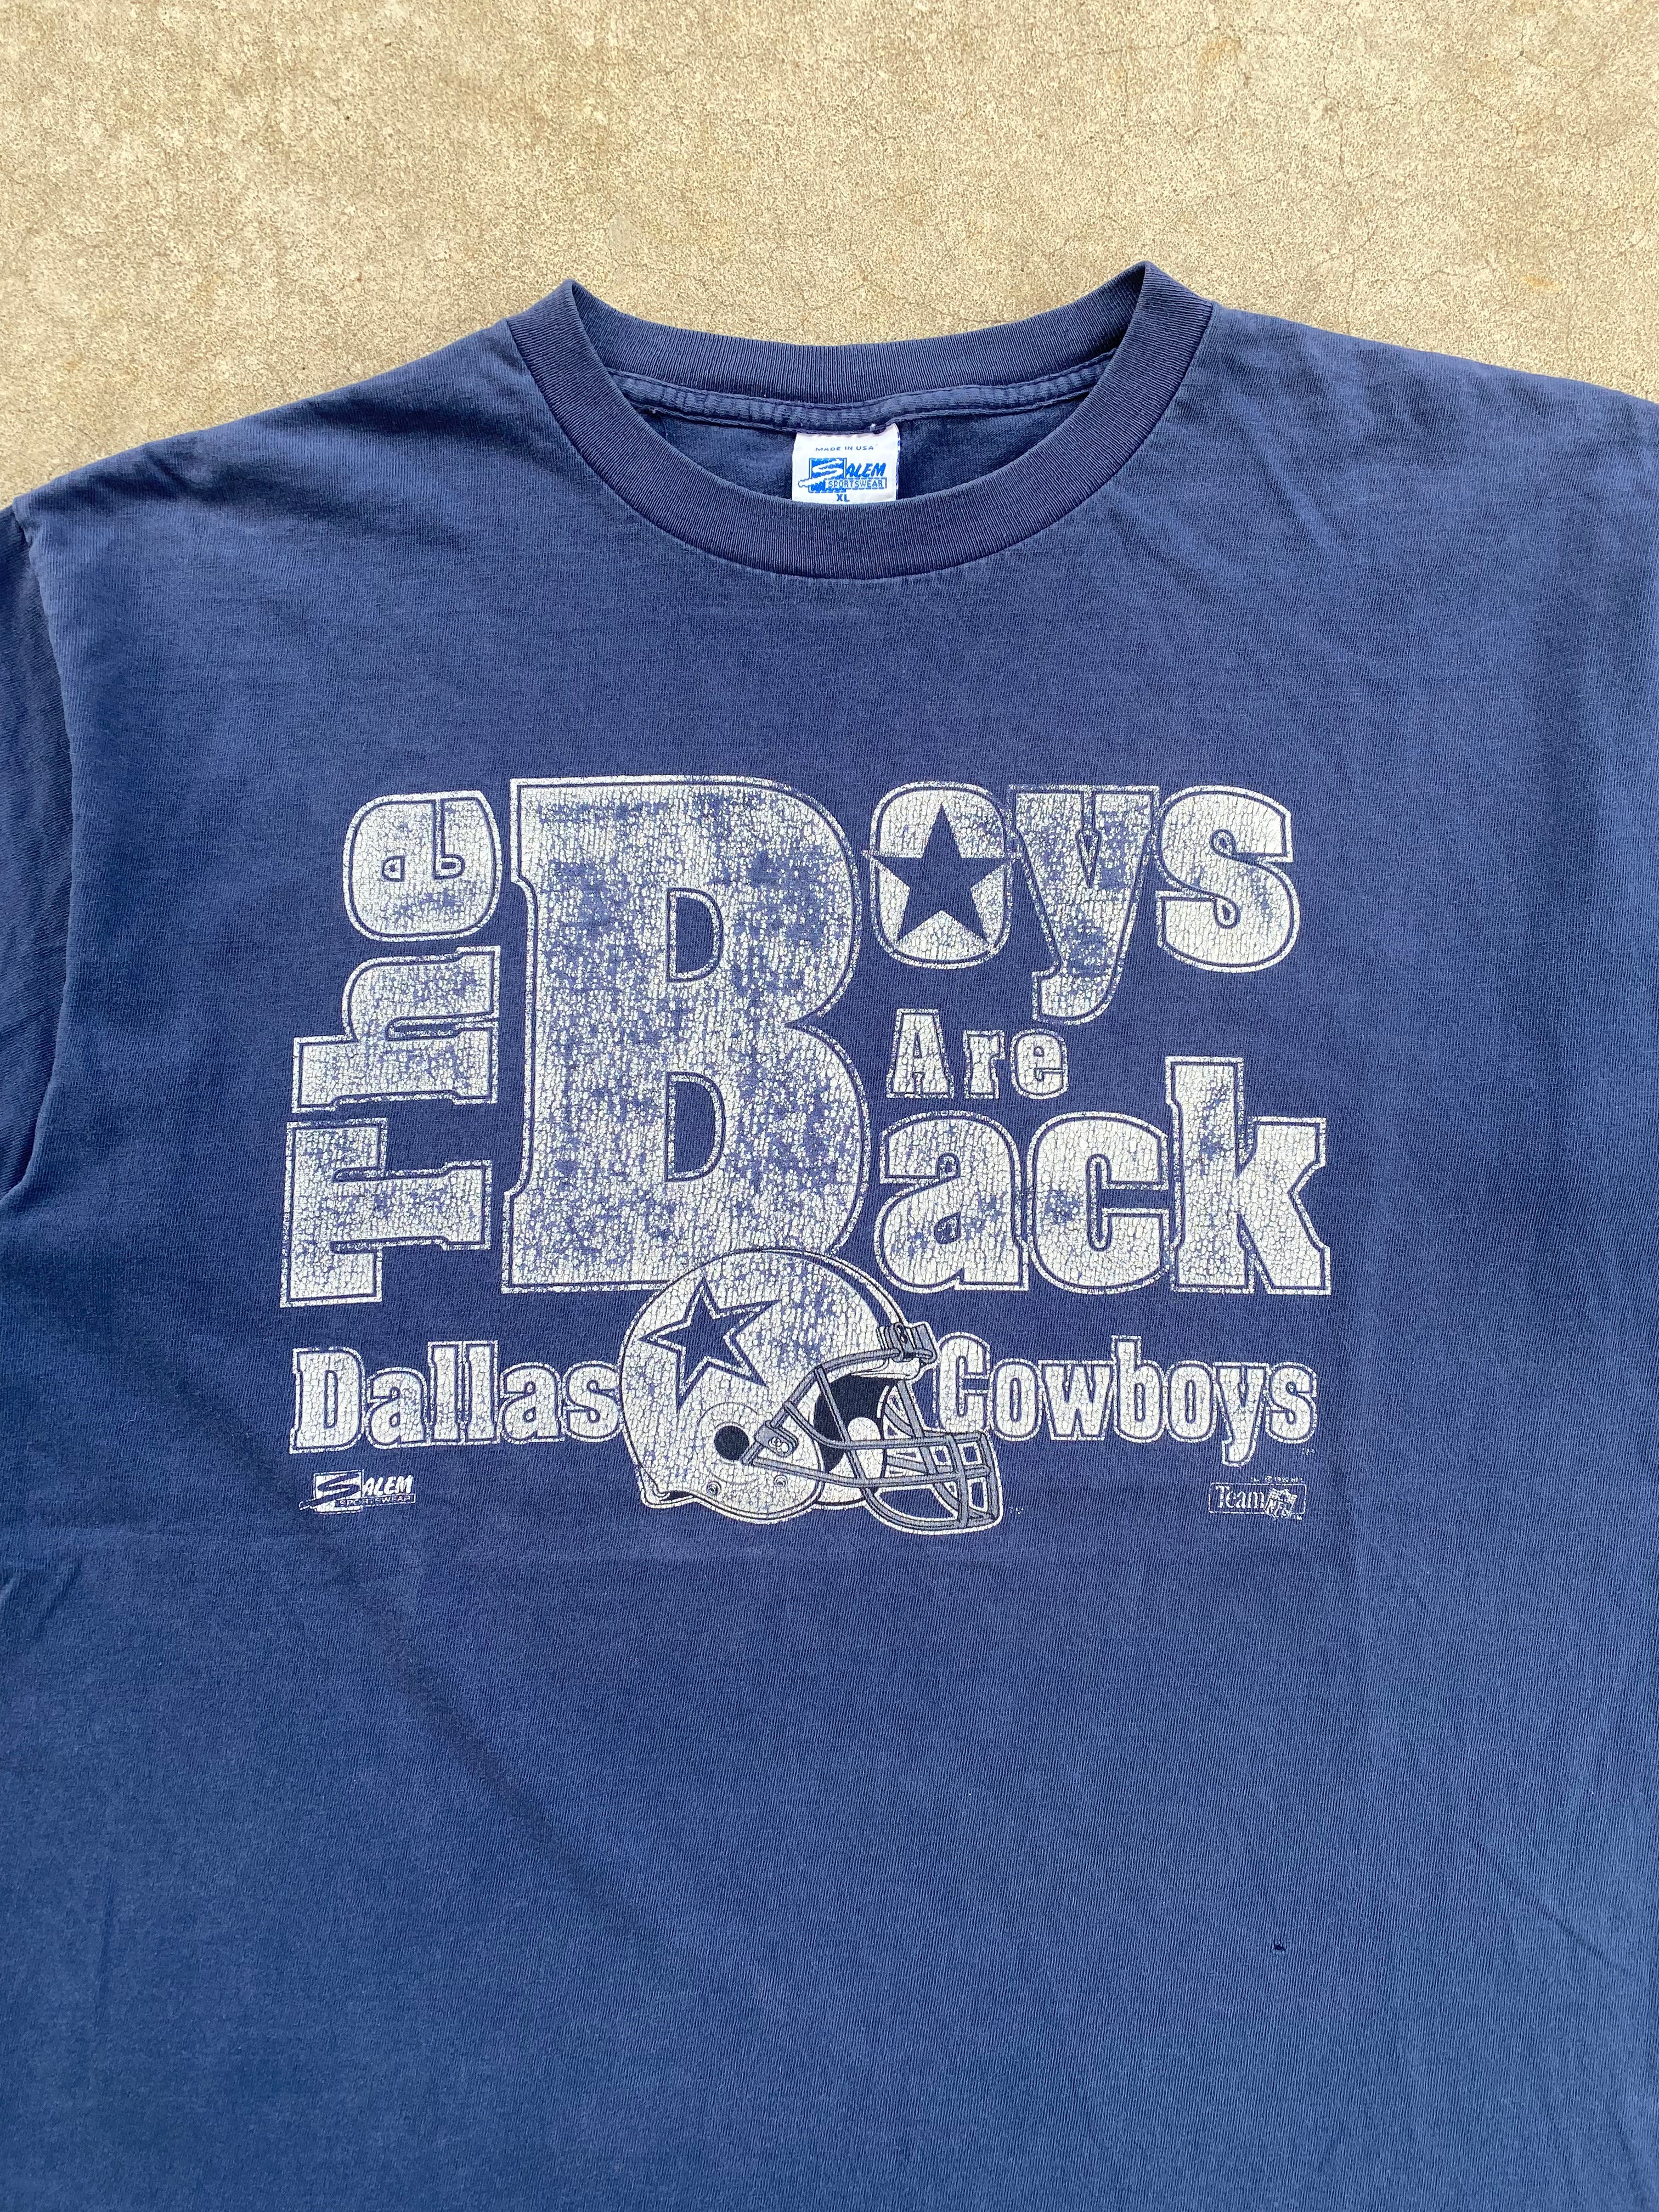 1992 Dallas Cowboys The Boys are Back T-Shirt (L/XL)